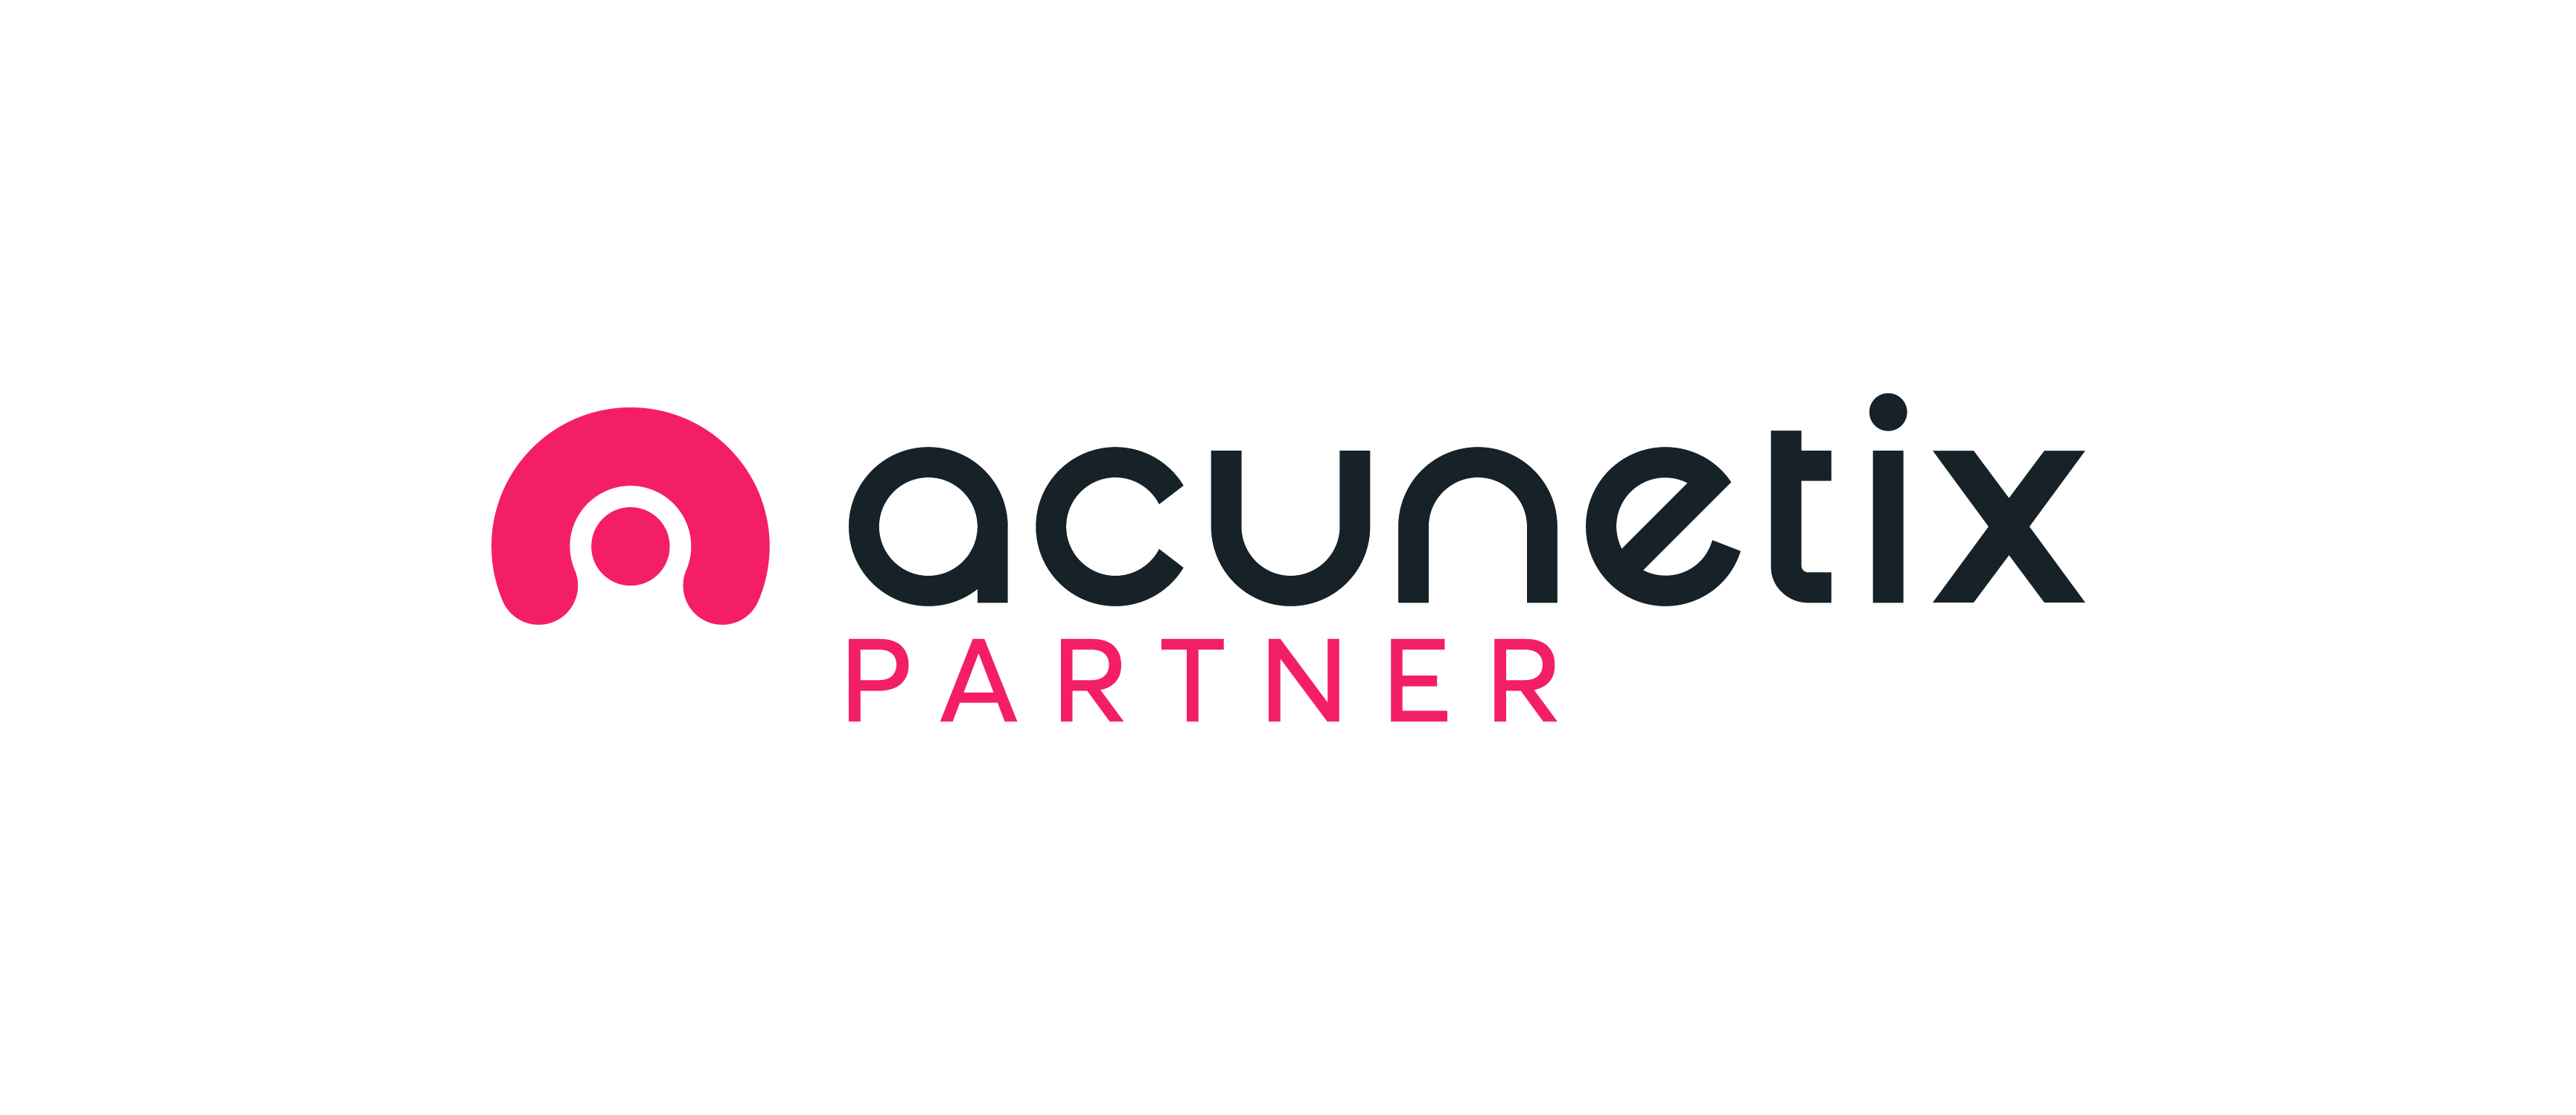 Acunetix Partner logo